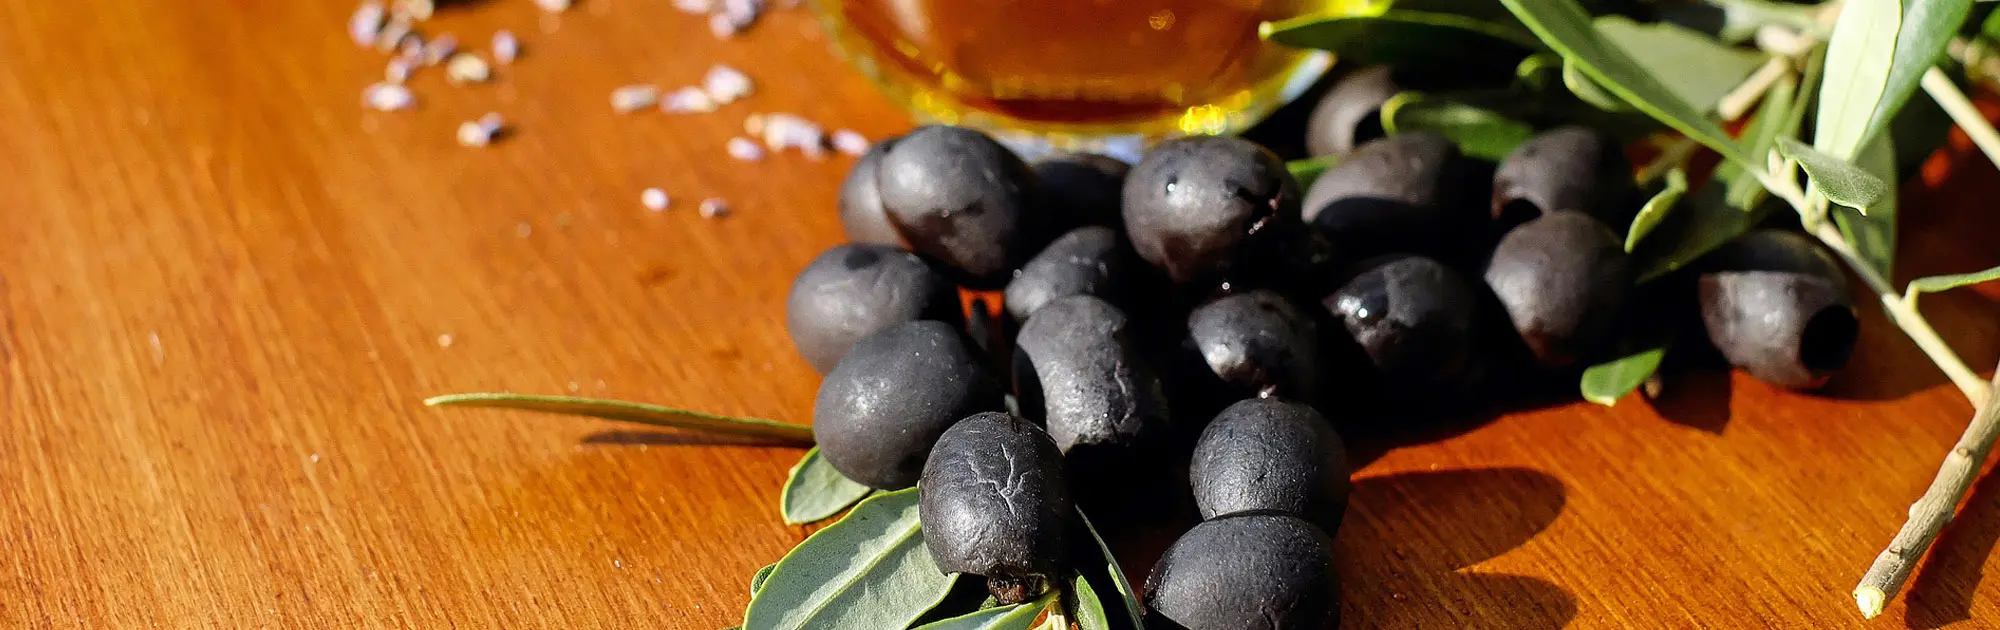 Easy black olives recipes.